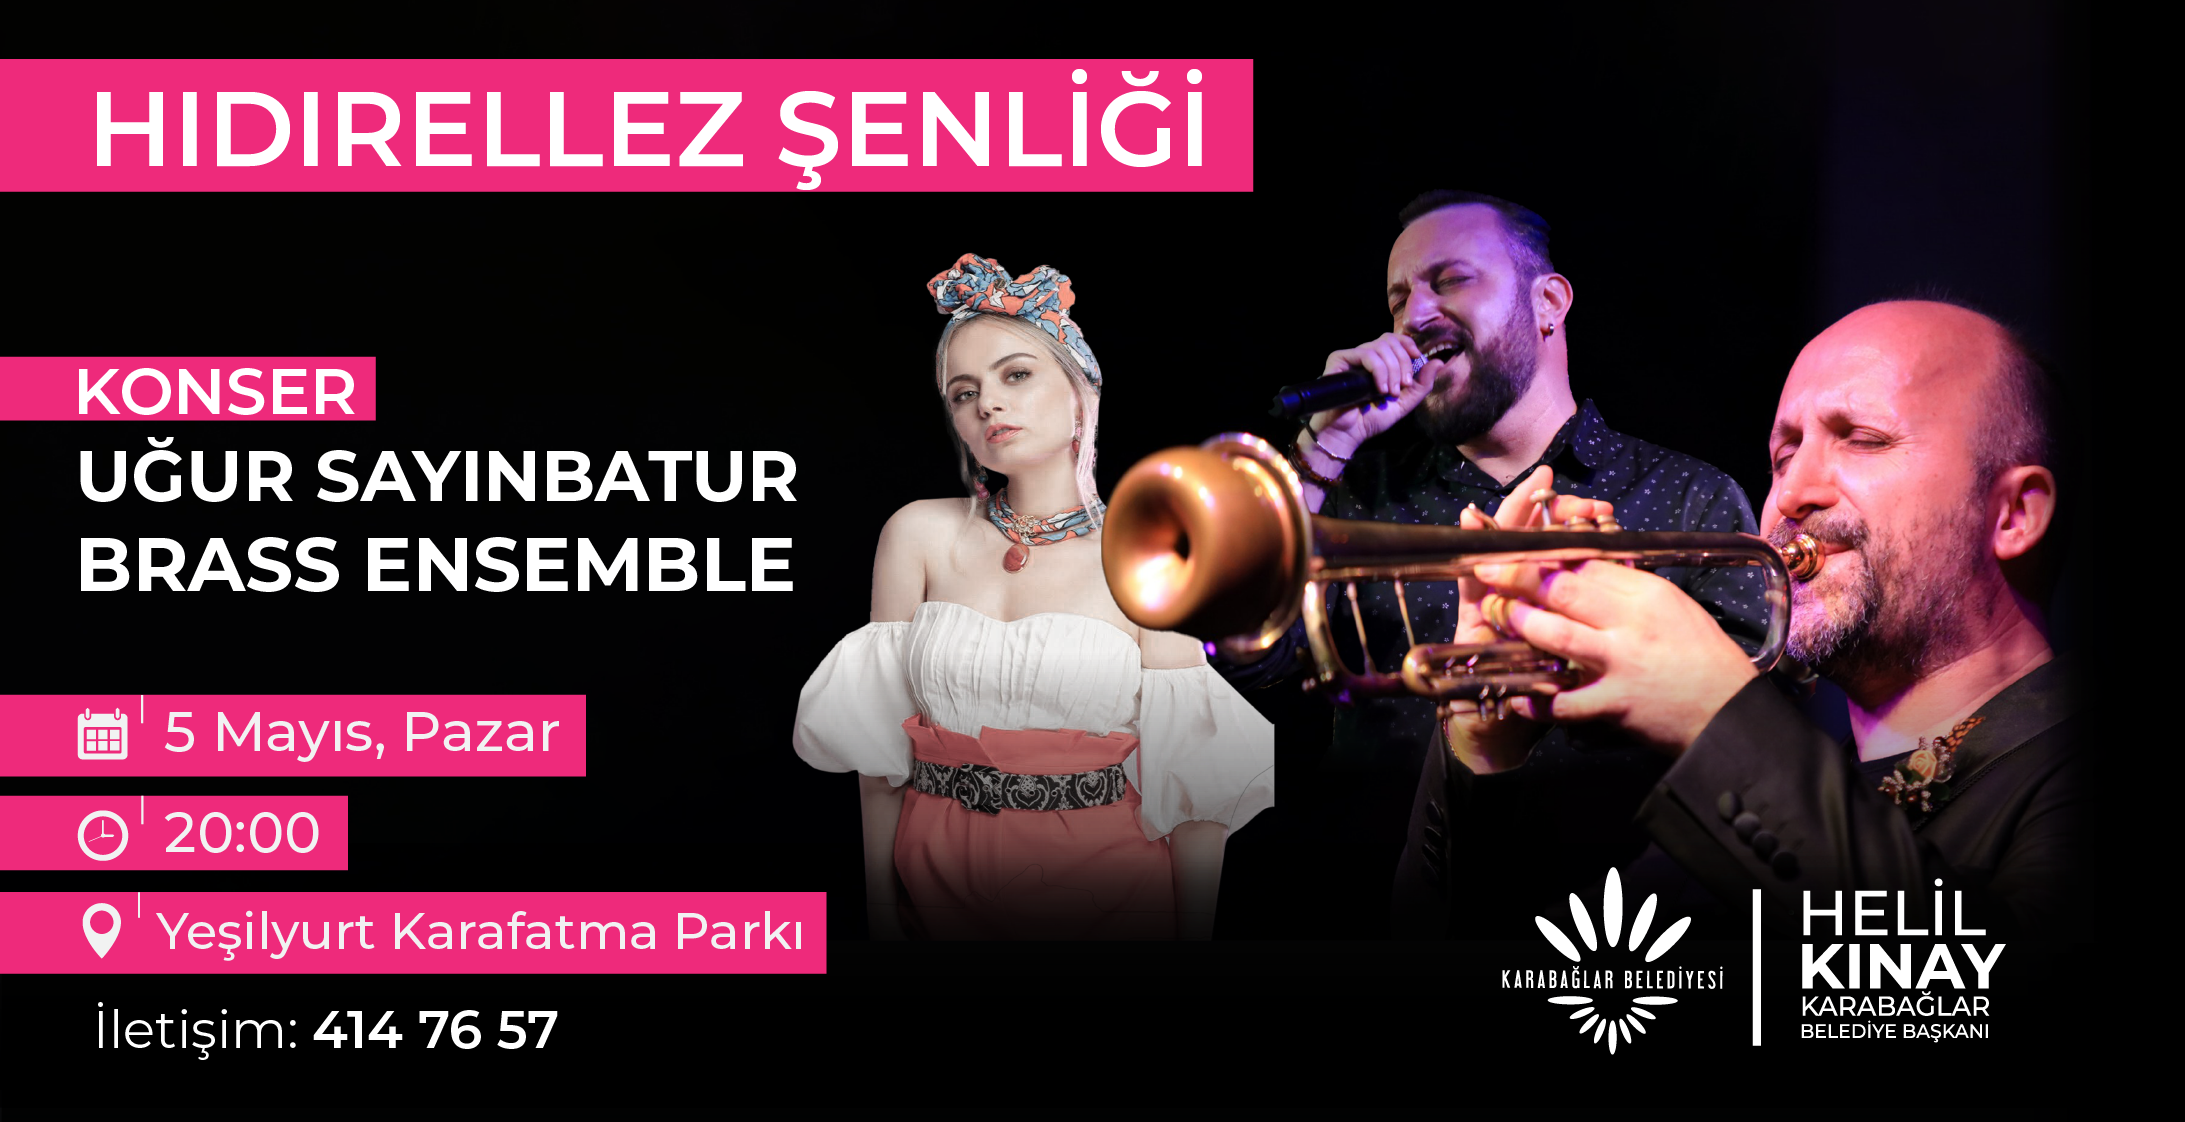 Başkan Kınay’dan konsere davet